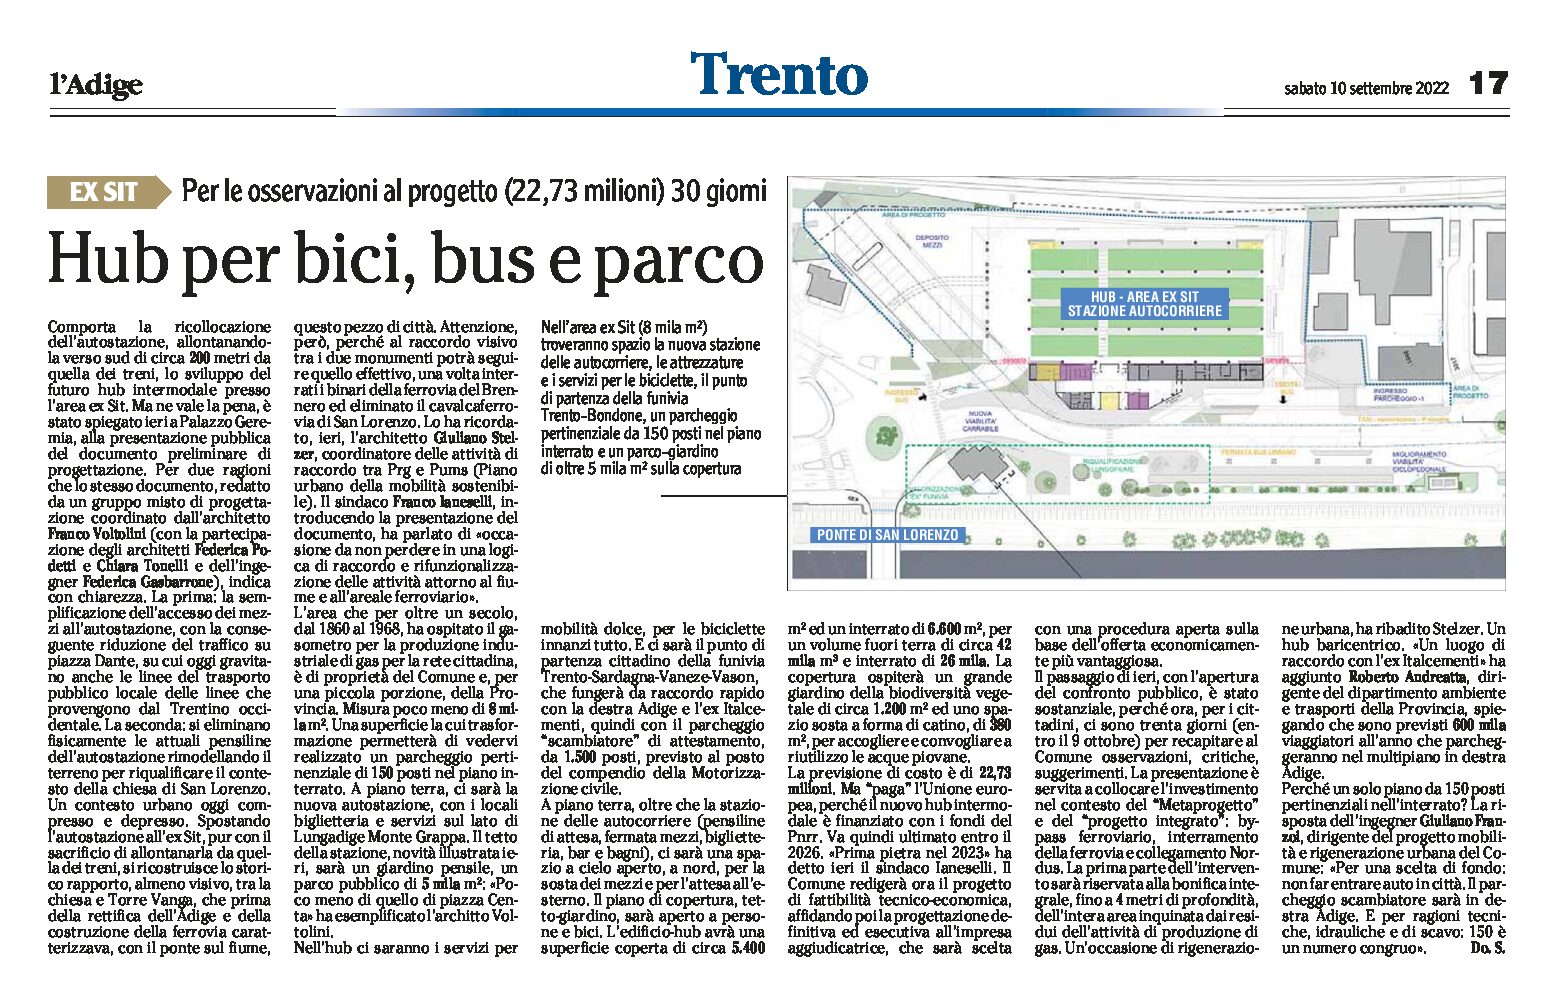 Trento, area ex Sit: hub per bici, bus e parco